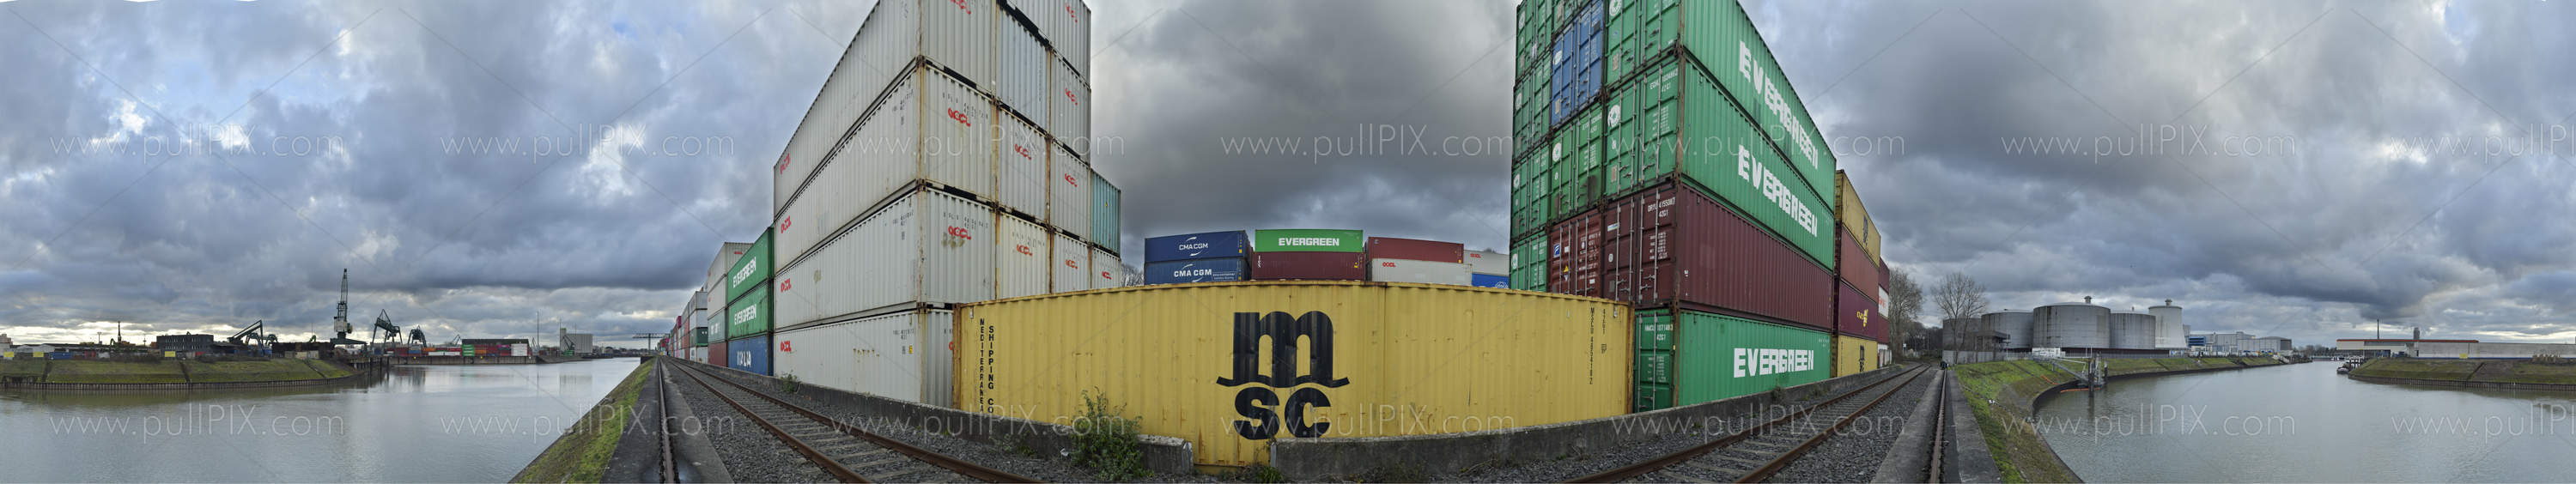 Preview Container im Hafen.jpg